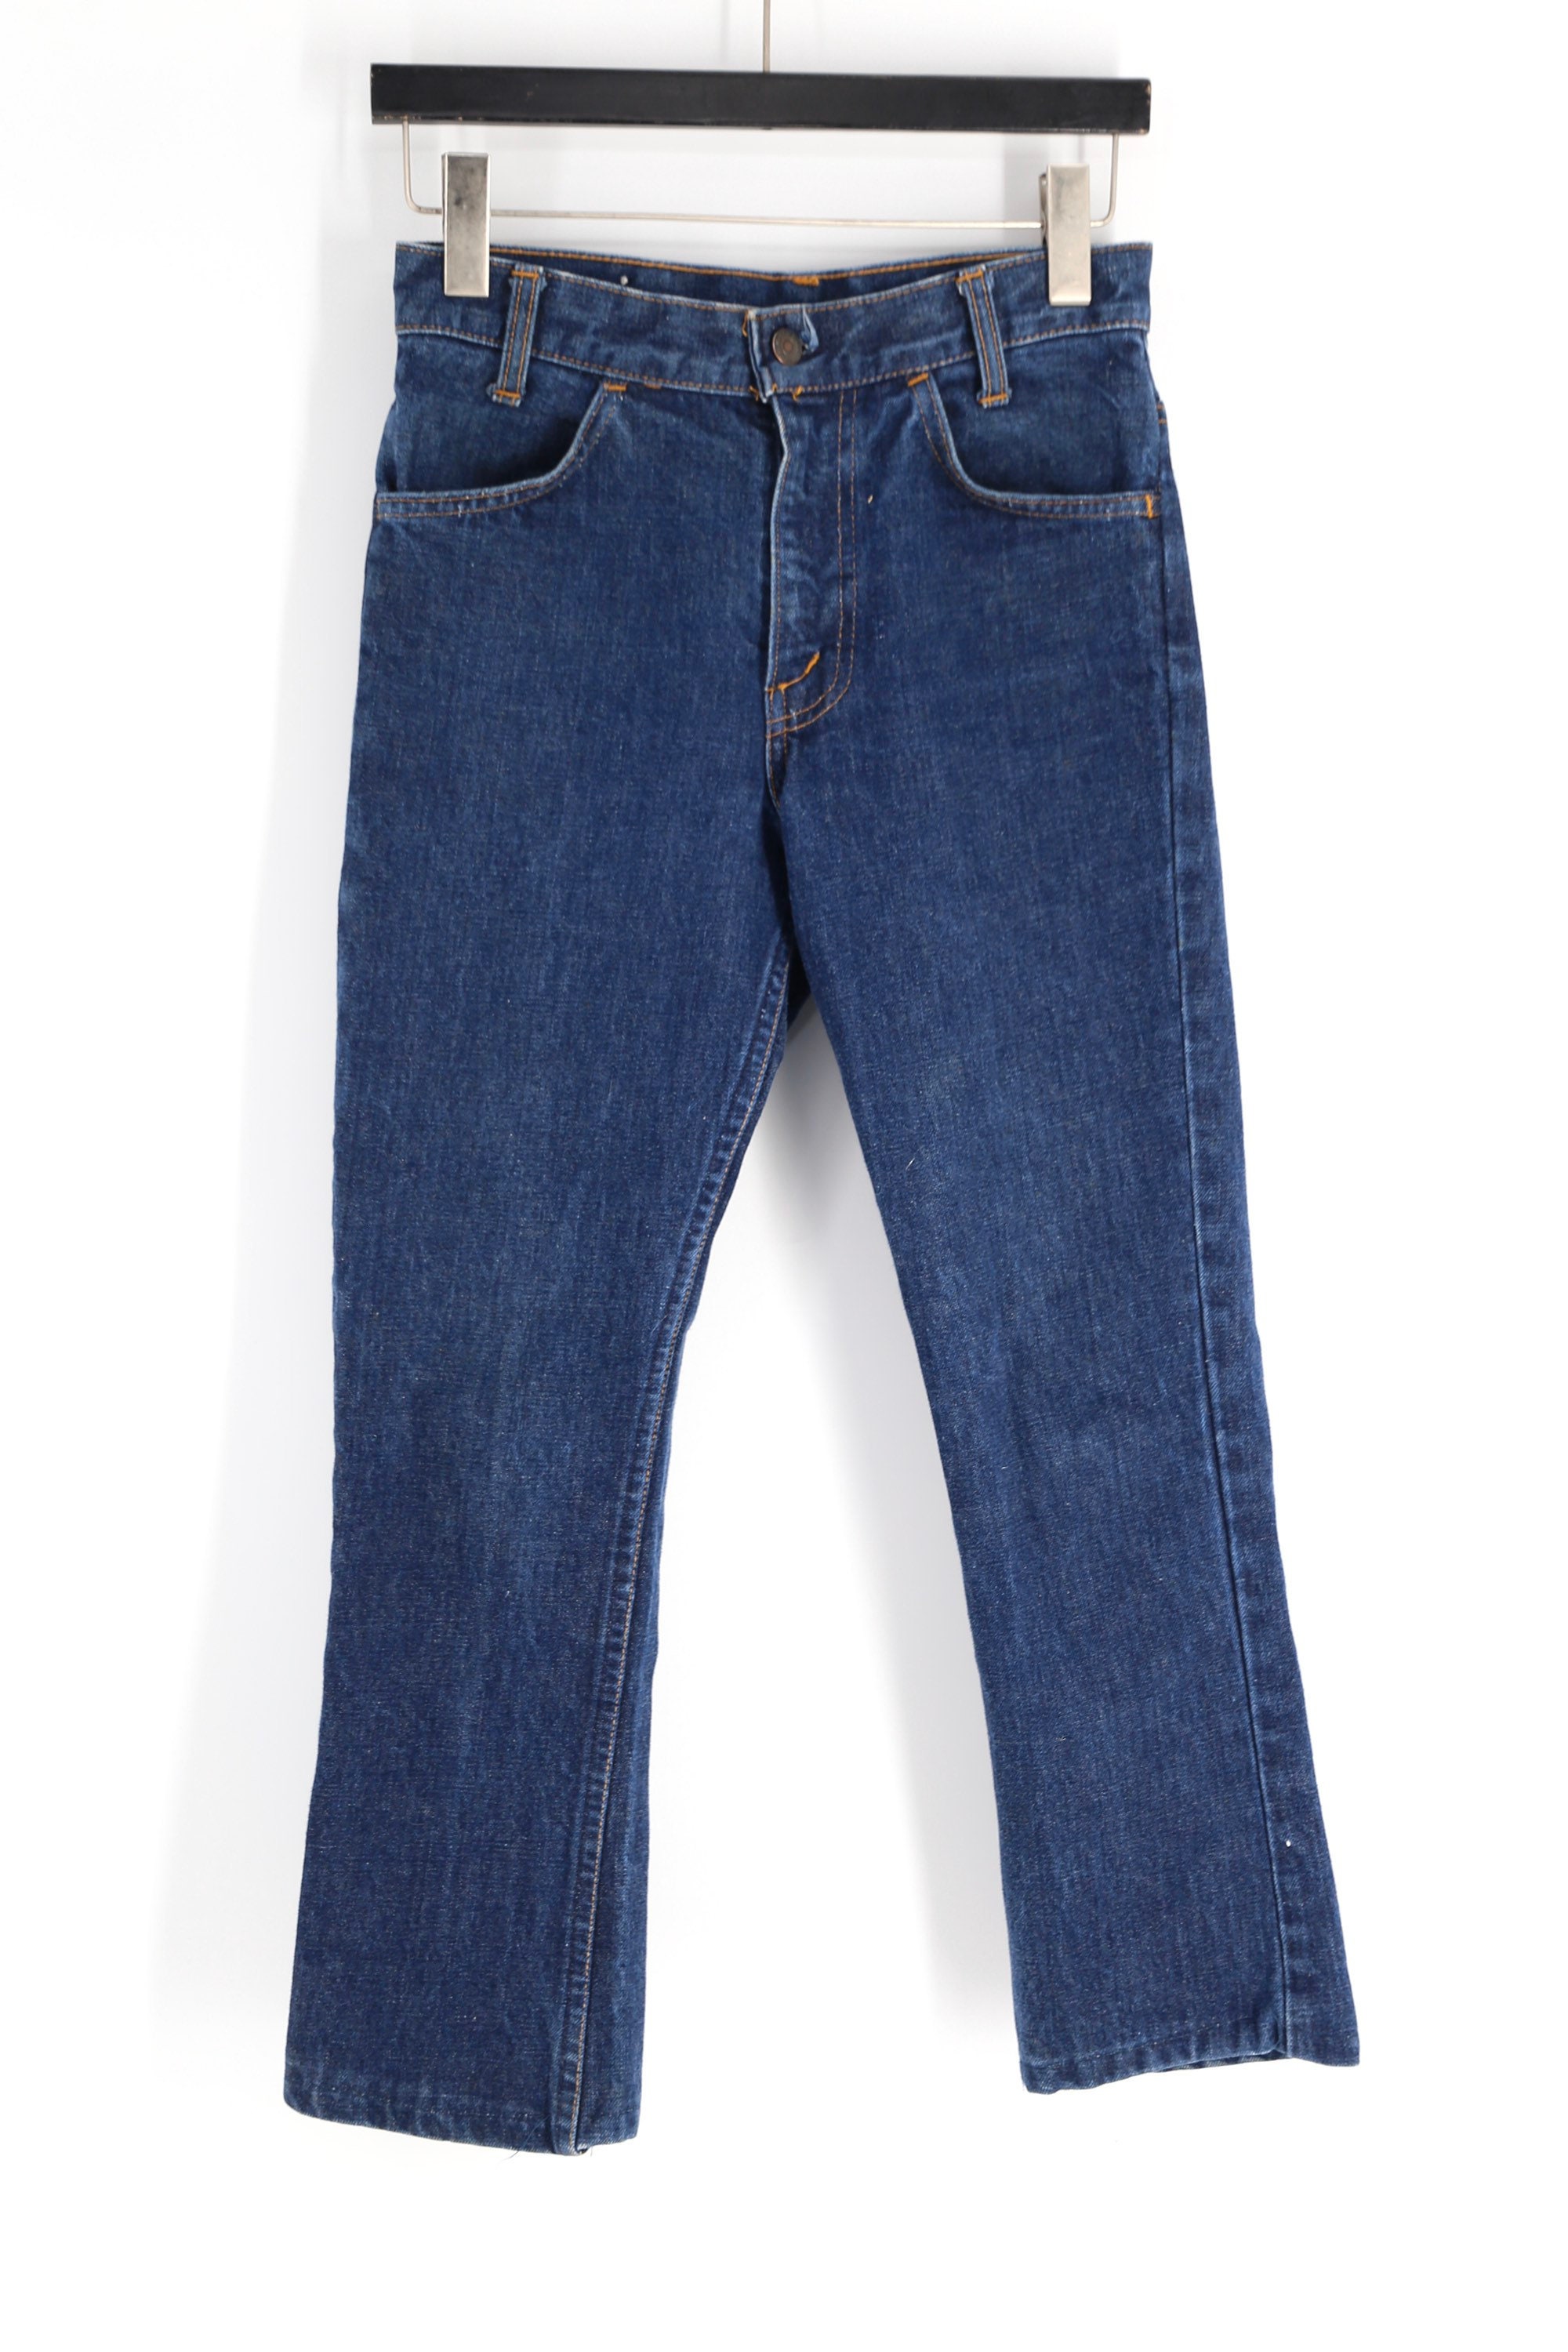 70s LEVIS 718 Orange Tab Student fit cropped jeans 28 / vintage 1970s ...